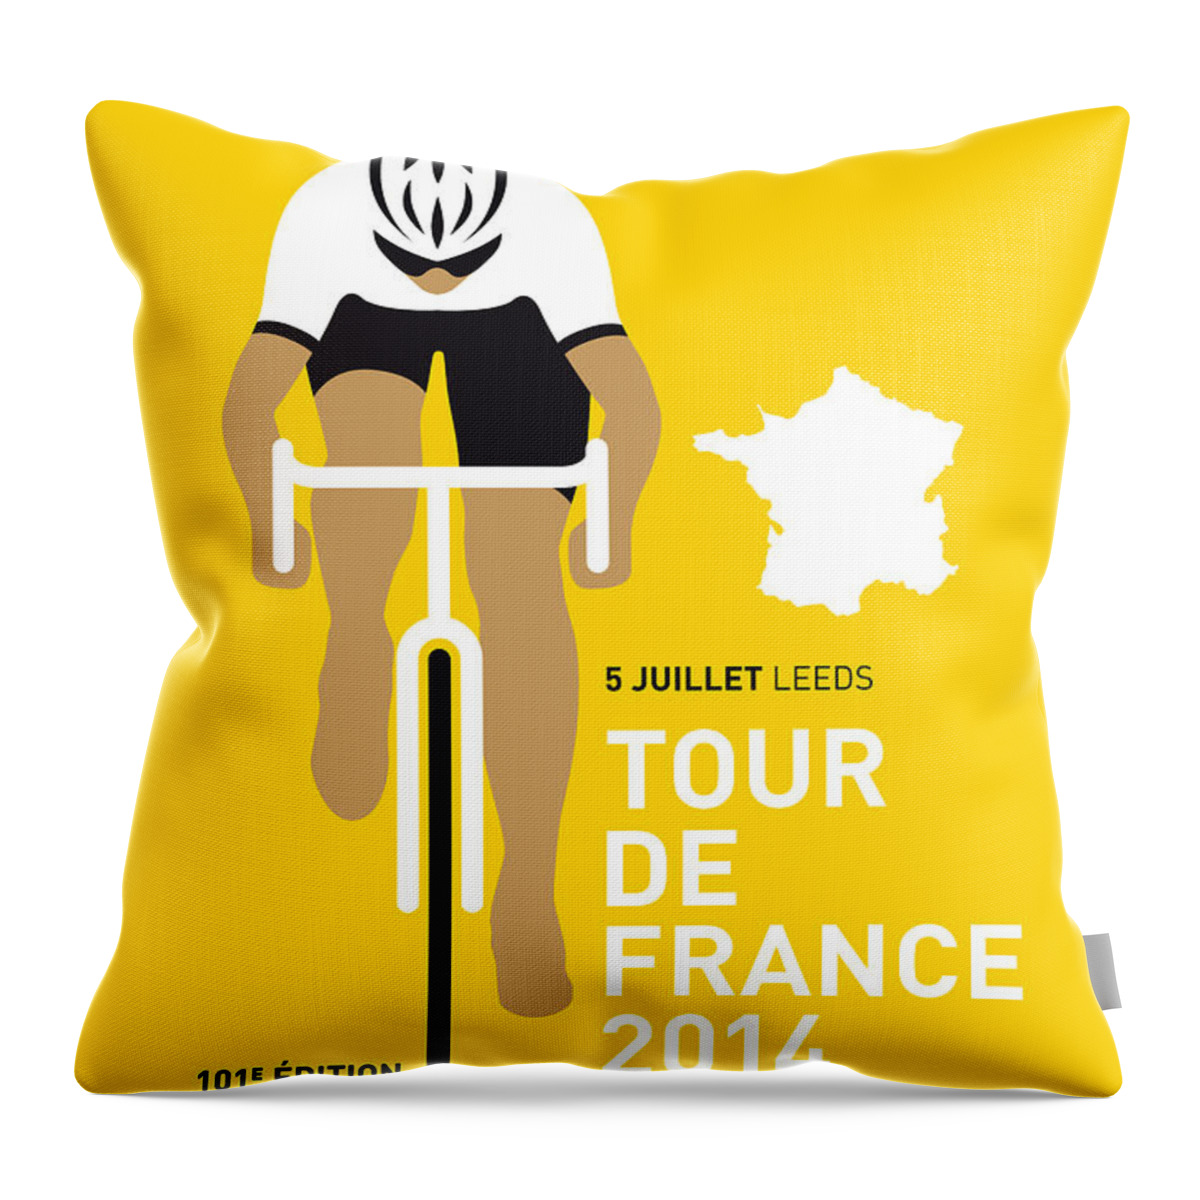 Minimal Throw Pillow featuring the digital art My Tour De France Minimal Poster 2014 by Chungkong Art